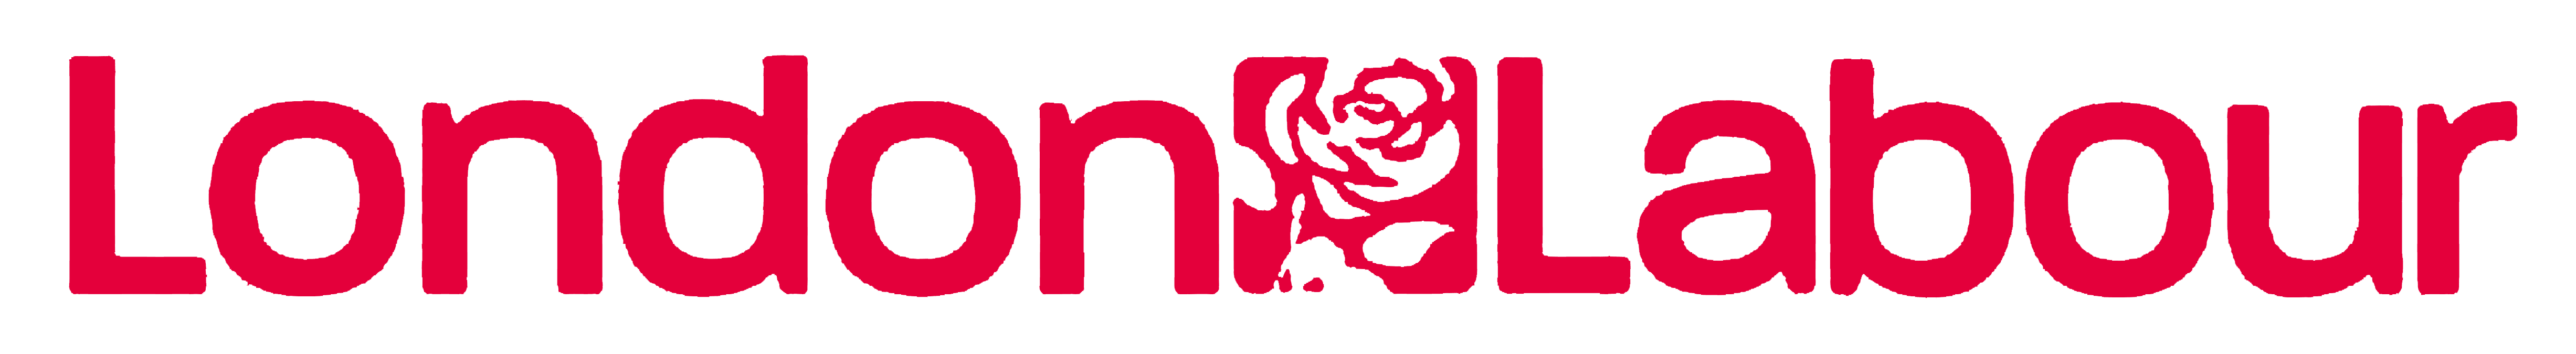 Labour Rose